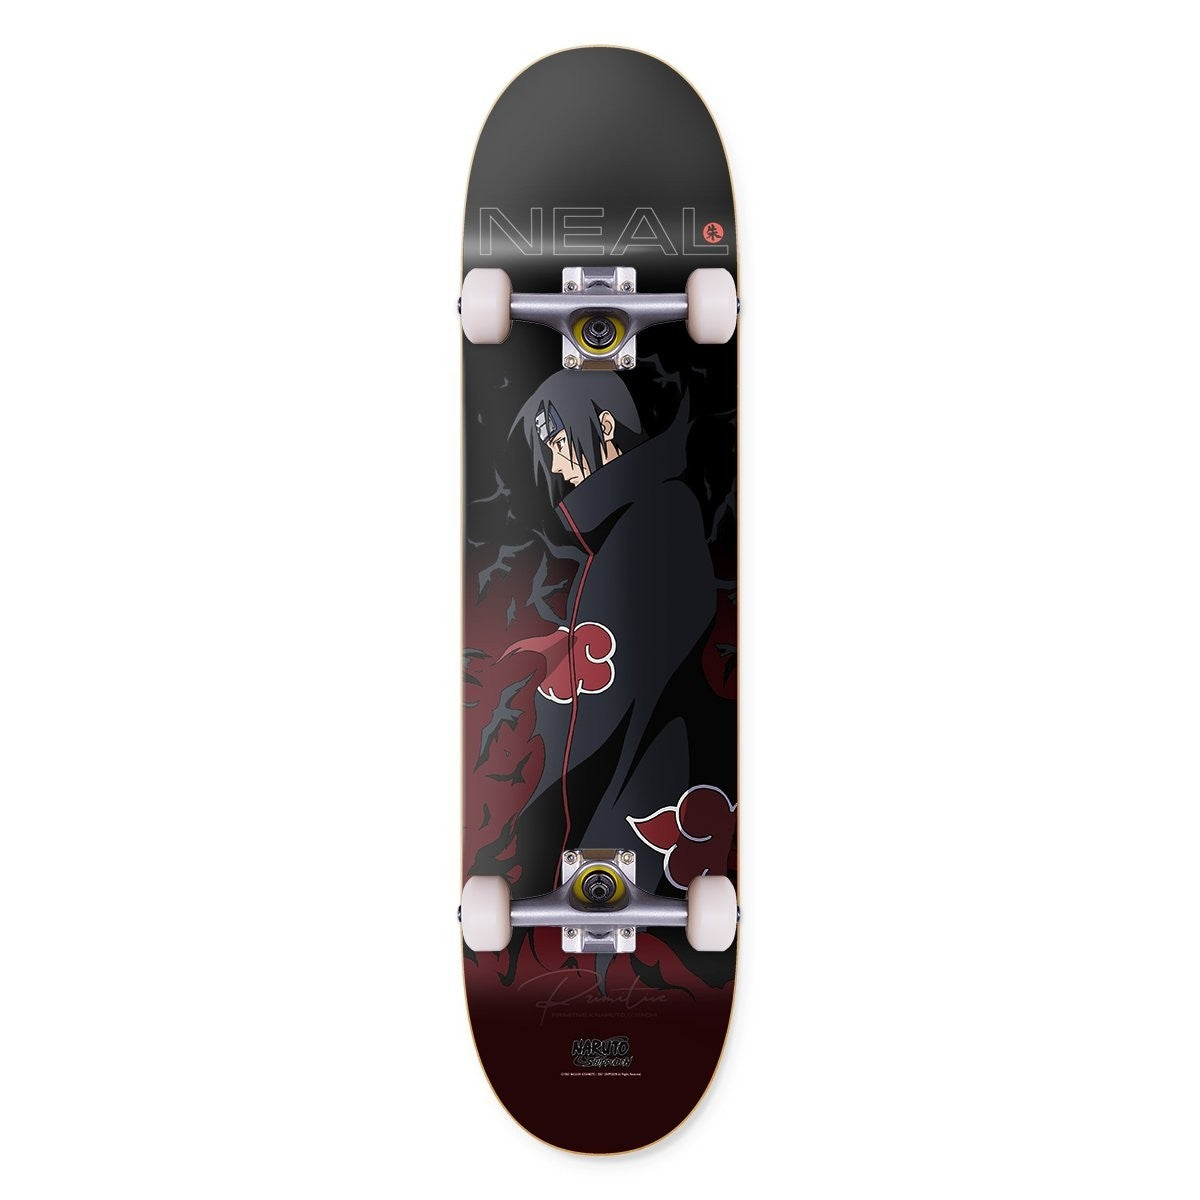 Robert Neal Crows Naruto x Primitive Complete Skateboard